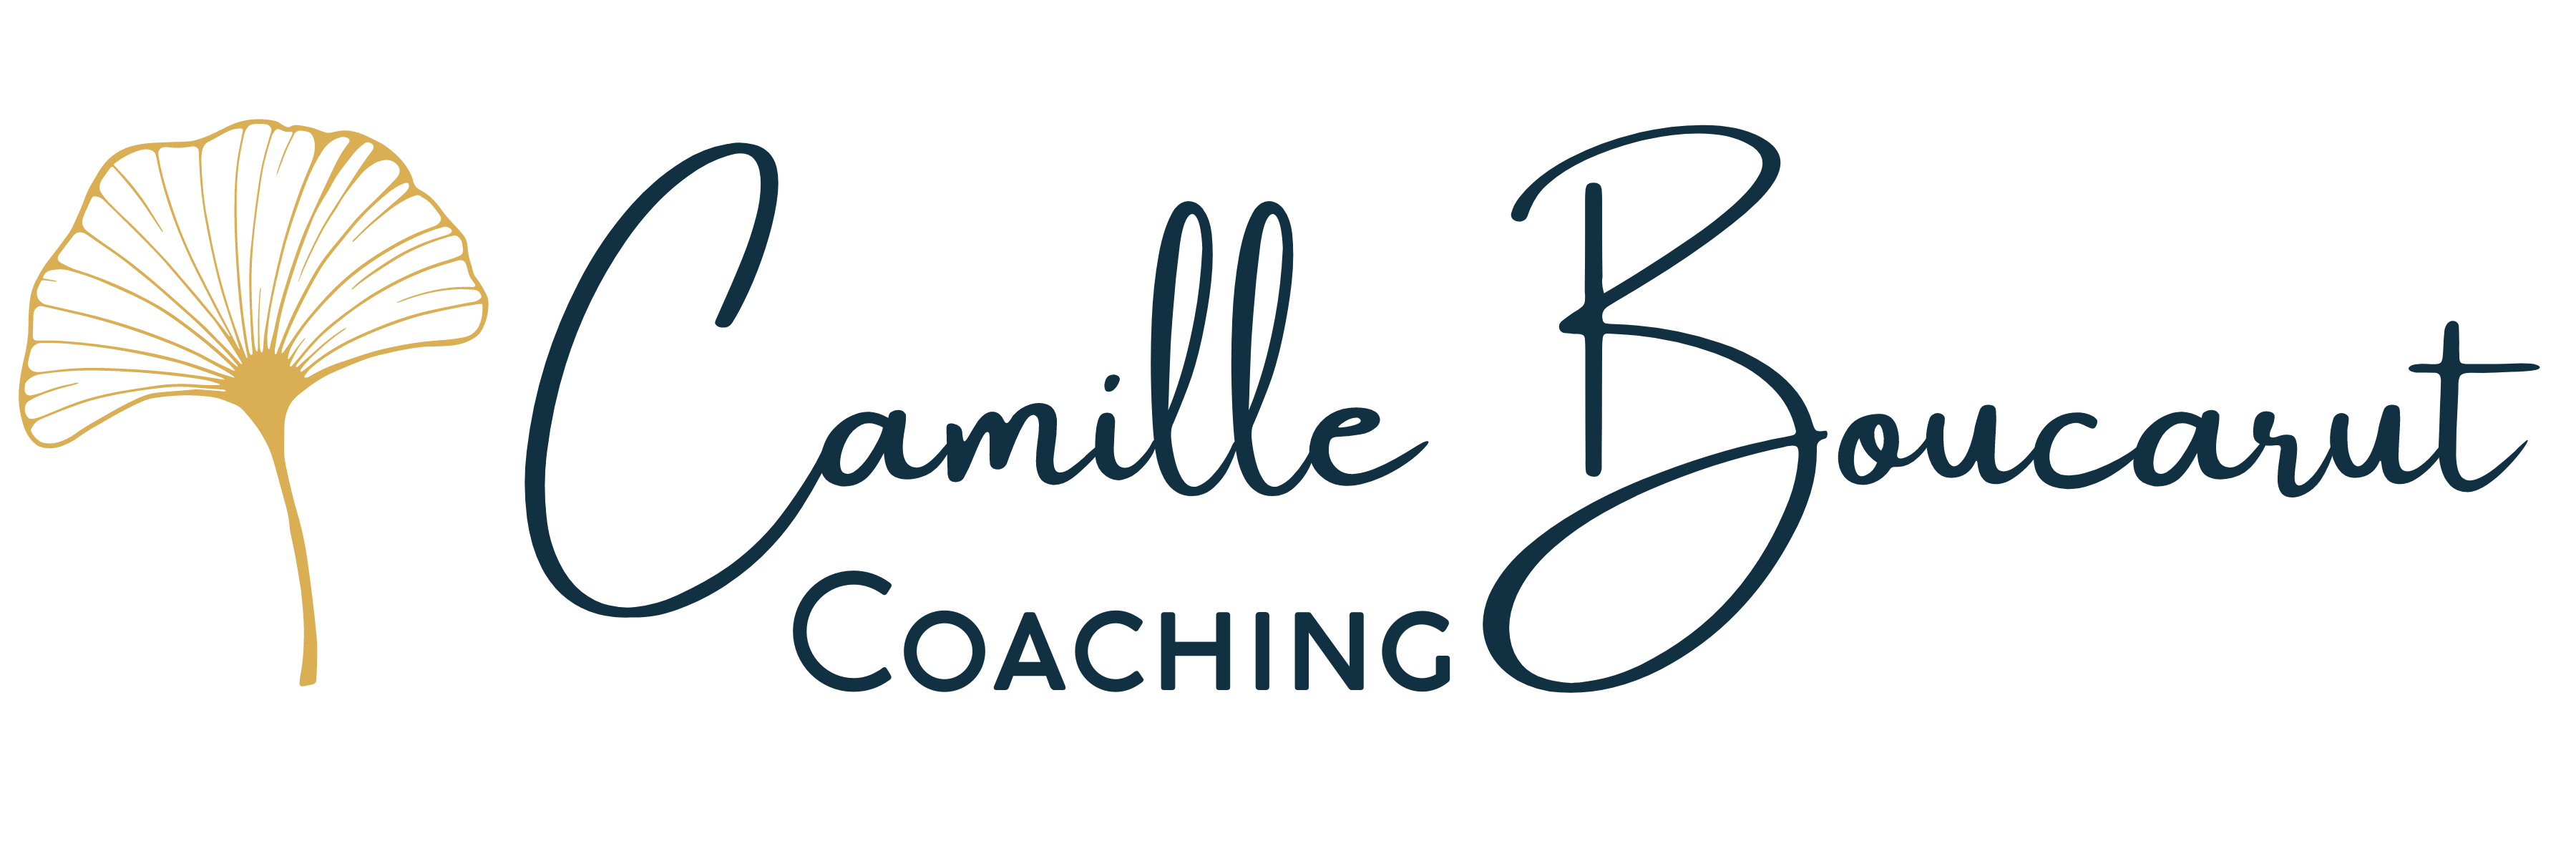 Camille Boucarut Coaching